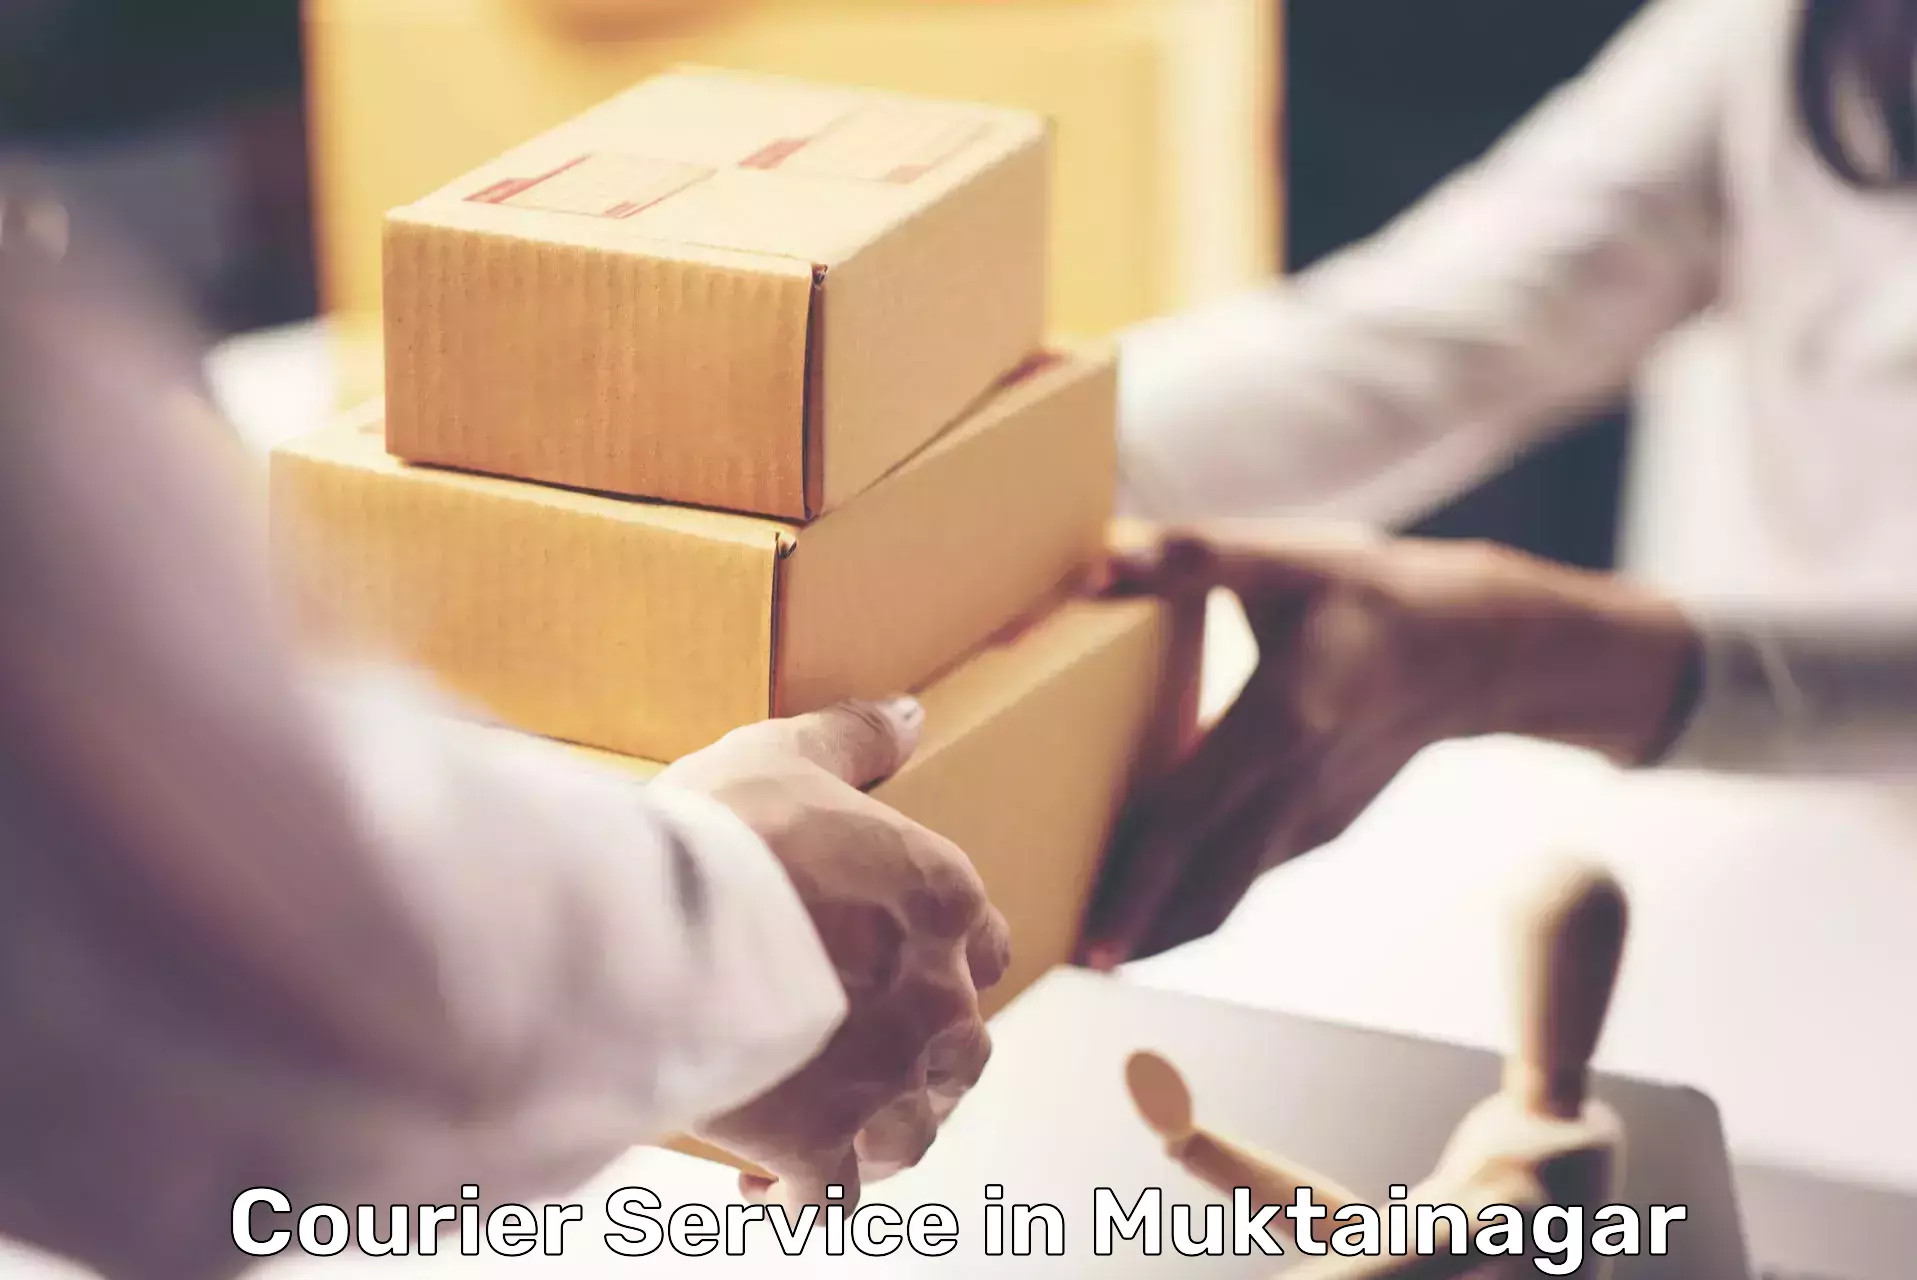 Shipping and handling in Muktainagar